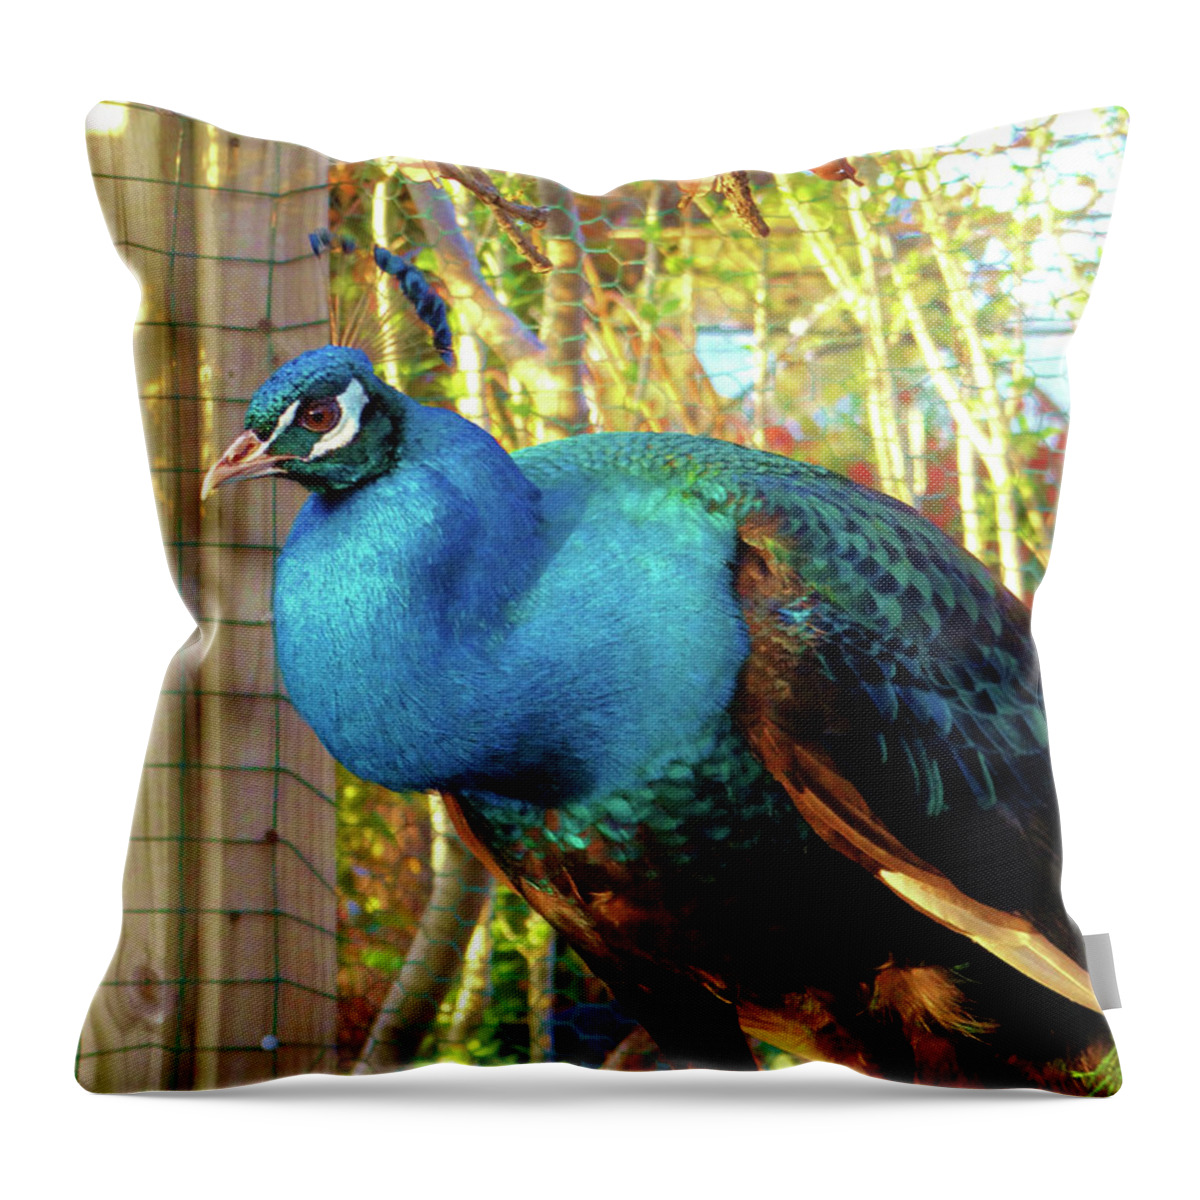 Peacock Throw Pillow featuring the photograph Peacock Perch by Doris Aguirre